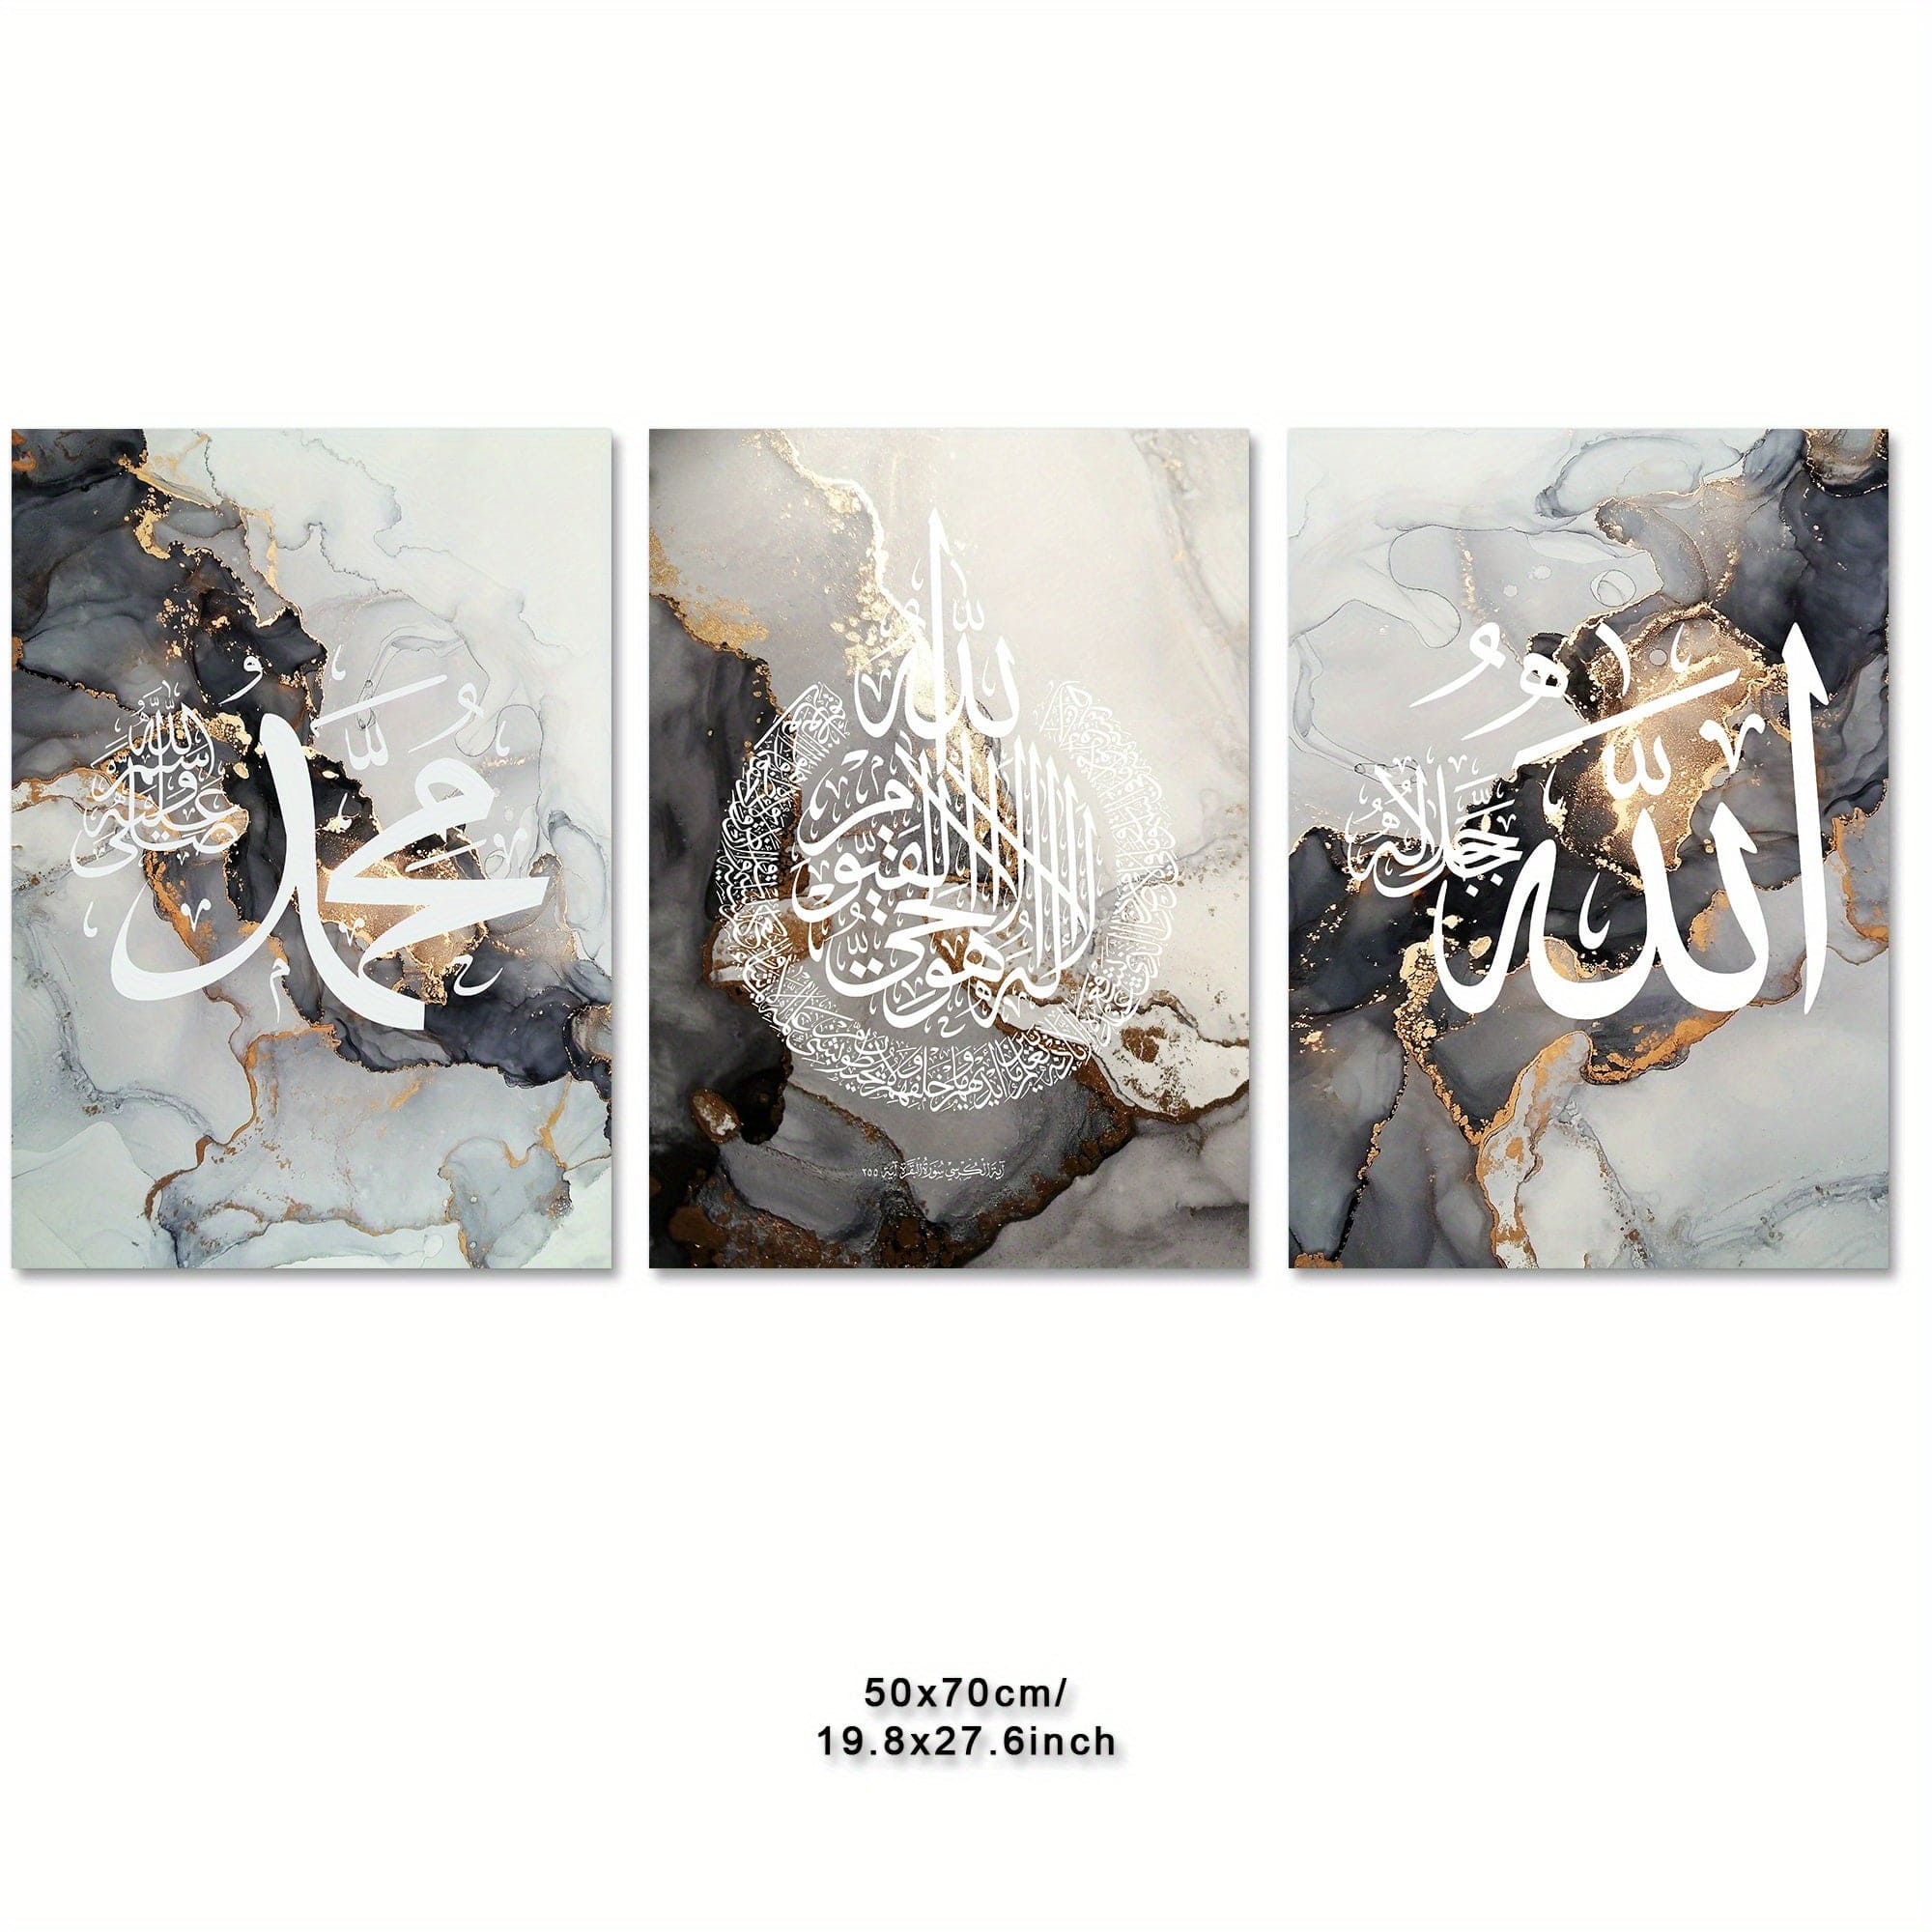 deen-souvenir customized 10 / 50 X 70 Cm 3-teiliges Islamisches Leinwandbild mit Motivationszitat - Typografie Kunstwerk 17592238194026